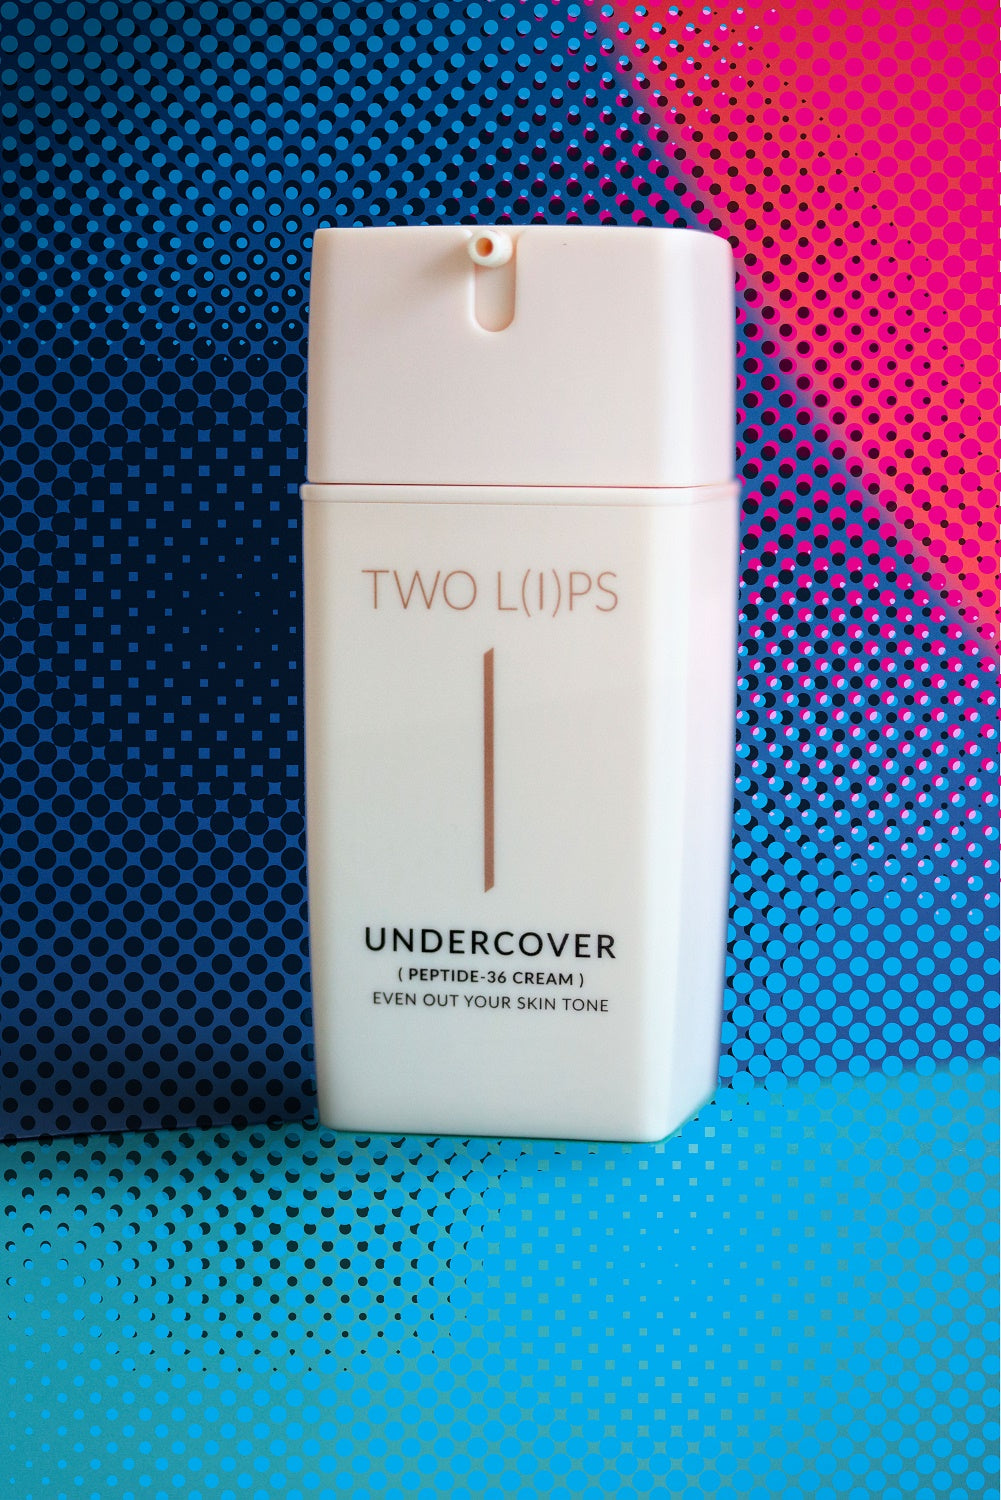 TWO L(I)PS UNDERCOVER (Peptide 36 Anti-Blemish Cream)